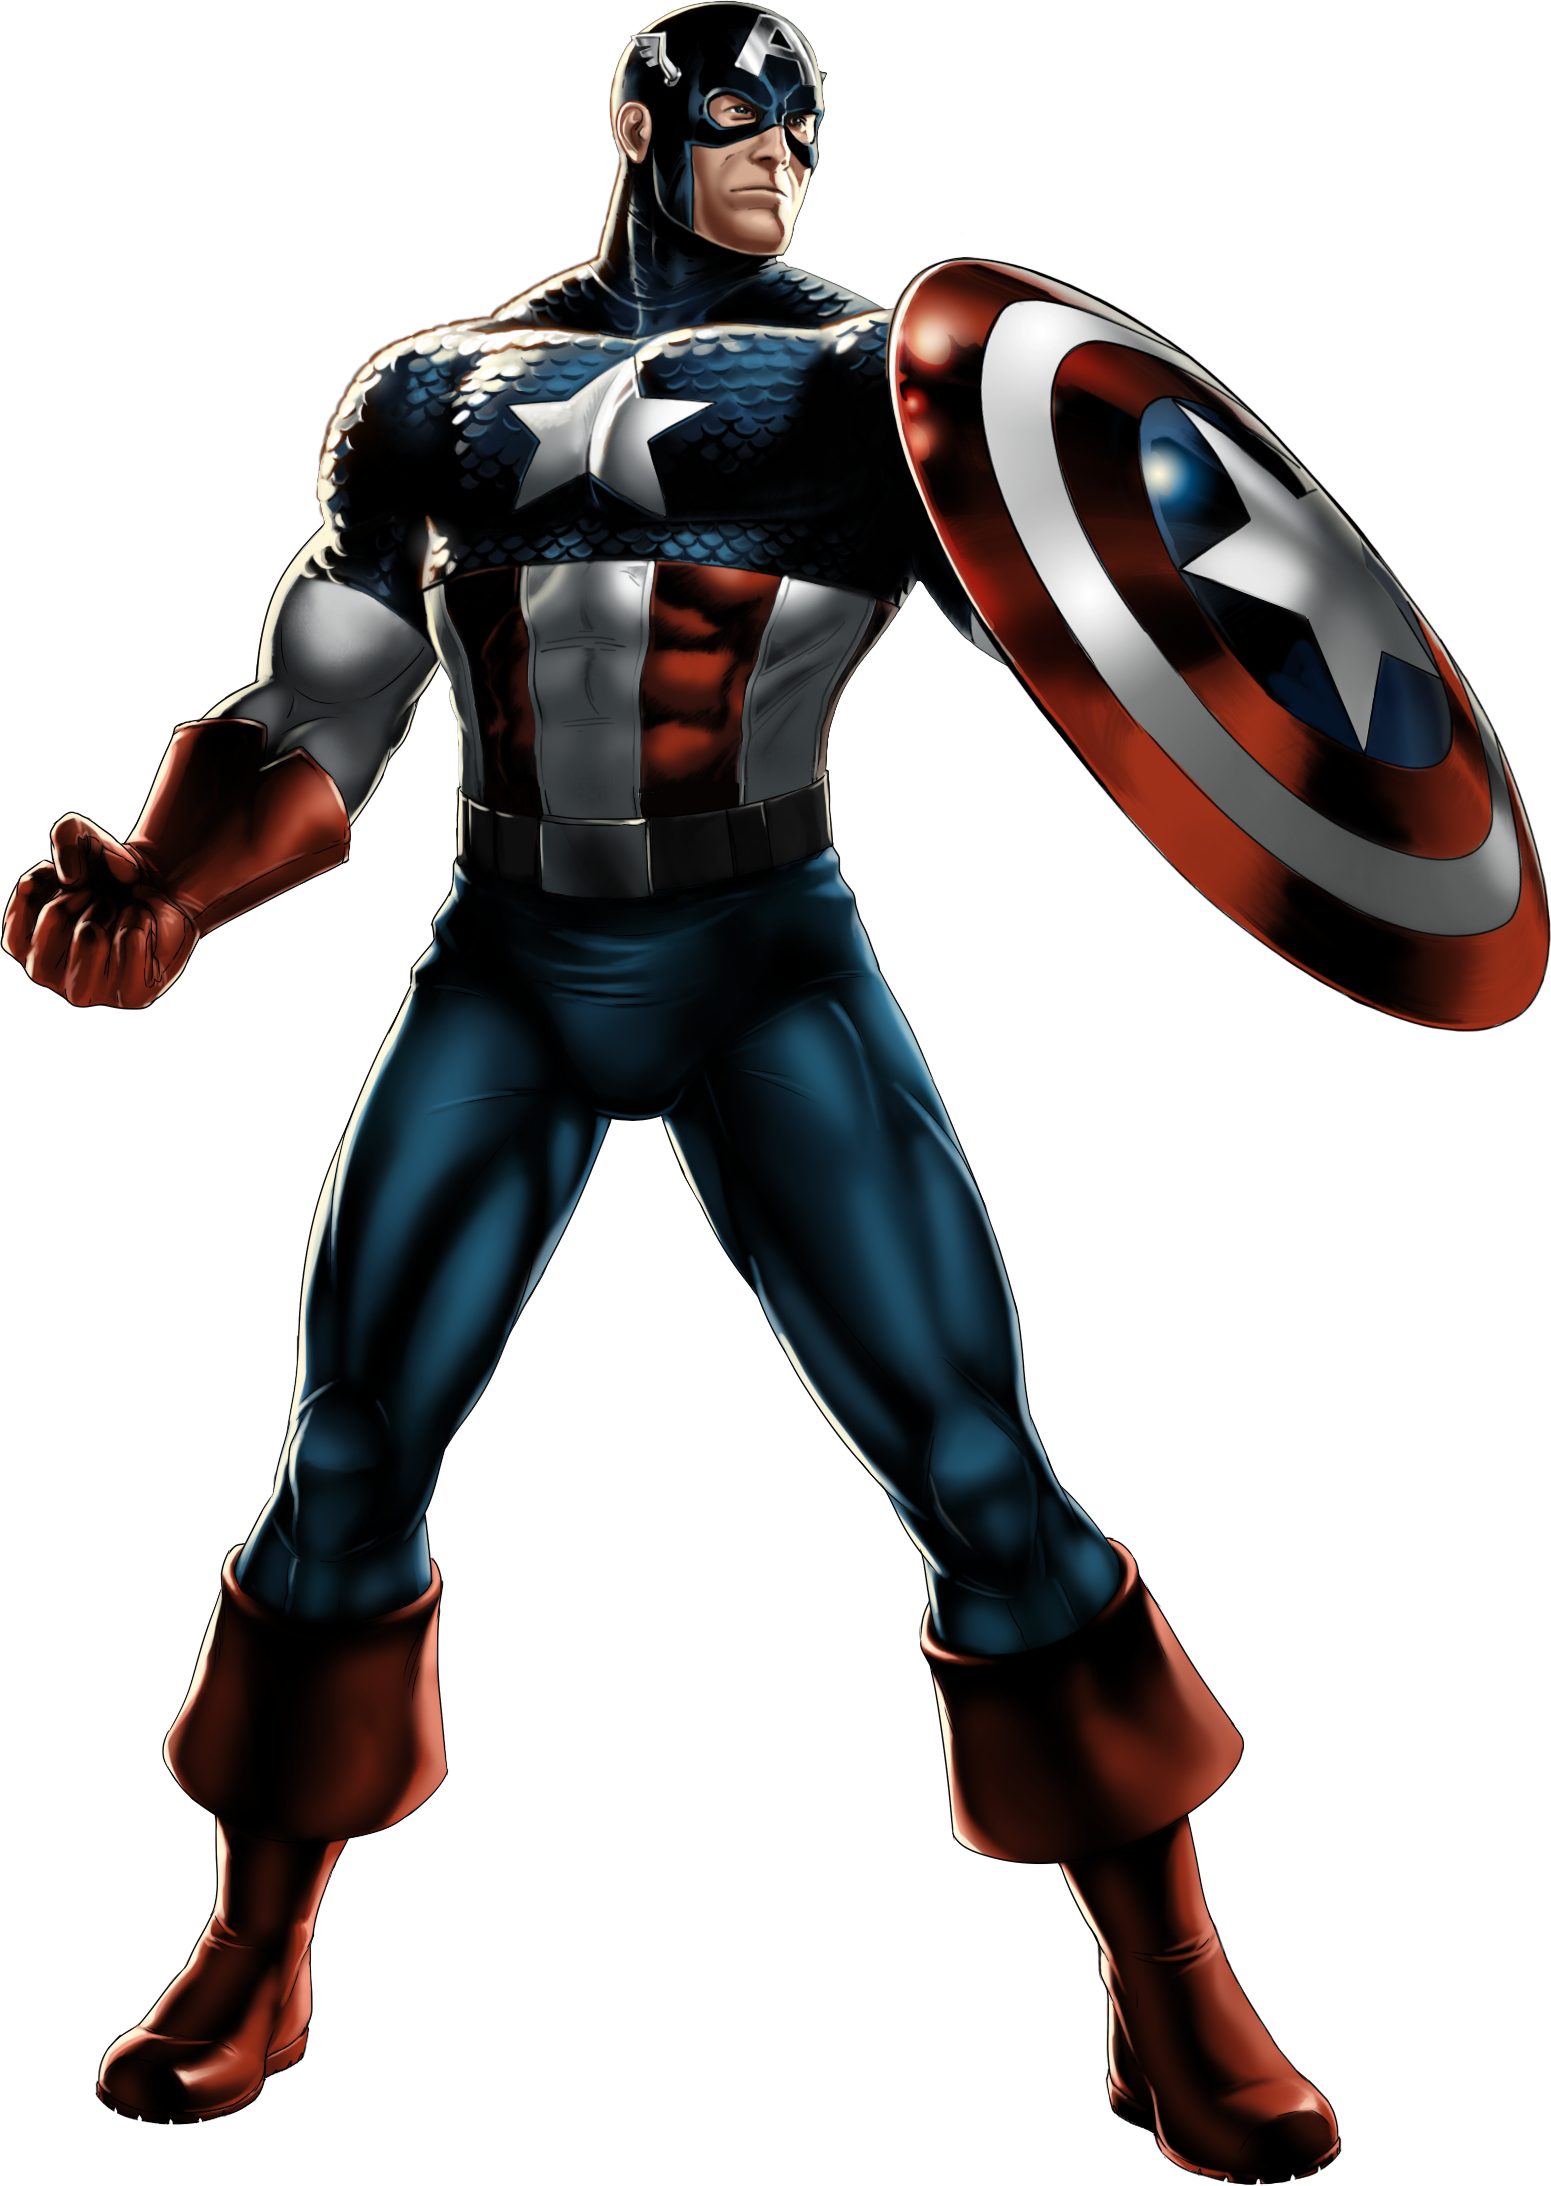 Марвел супер герой. Герои Марвел. Супергерой Марвел. Герои Марвел в комиксах Капитан Америка. Марвел авенджерс Альянс.